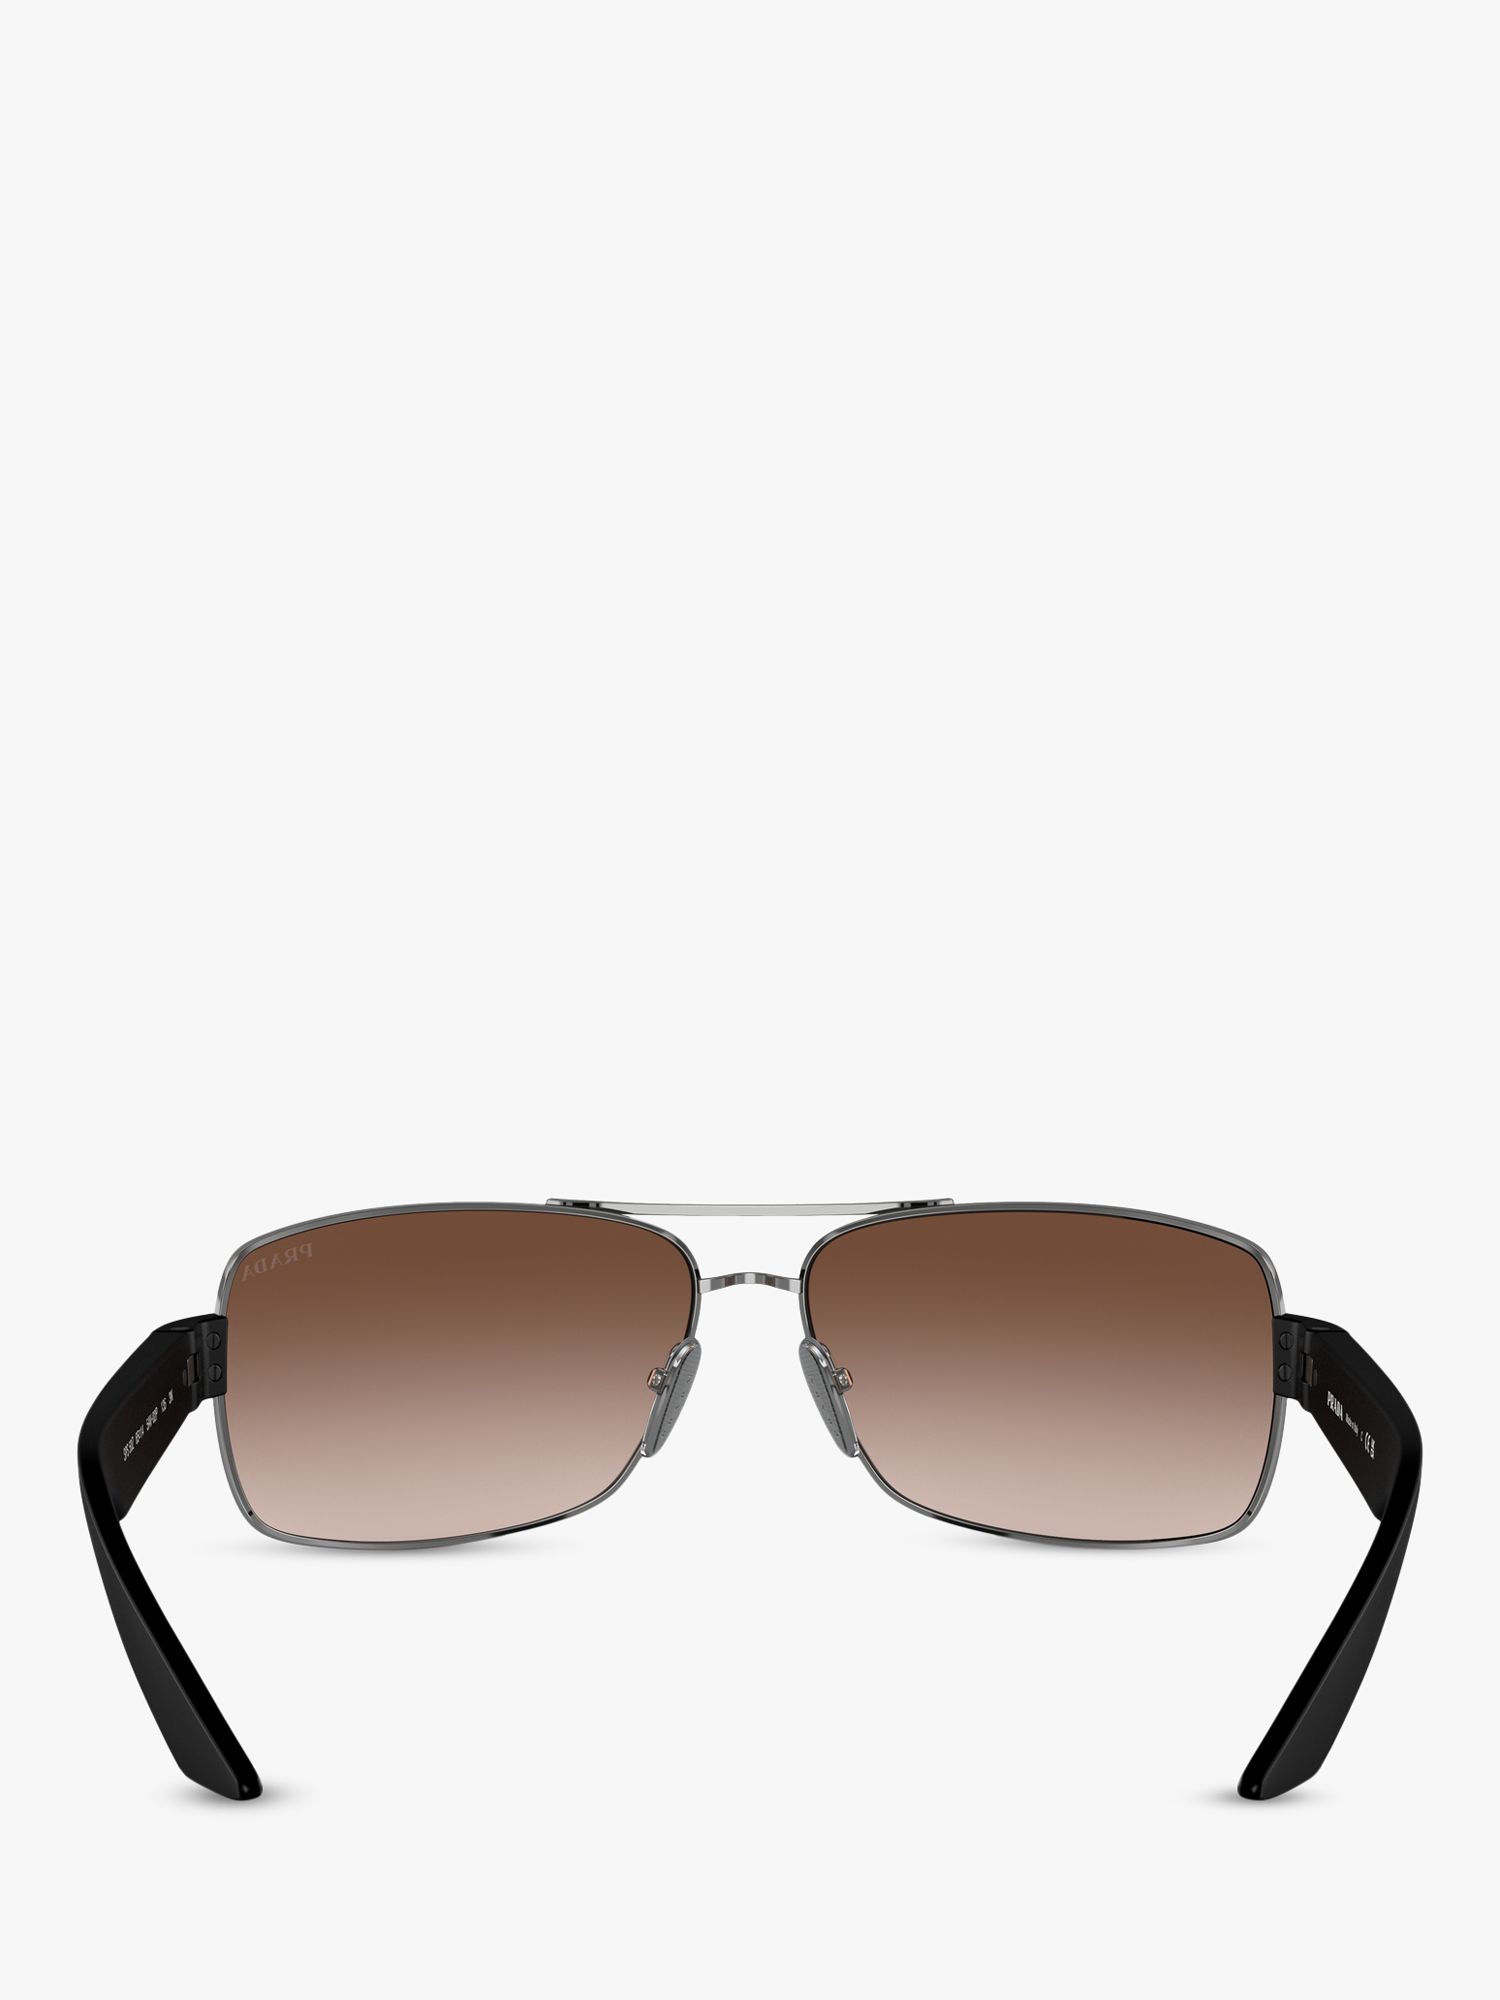 Buy Prada Linea Rossa PS 50ZS Men's Rectangular Sunglasses Online at johnlewis.com